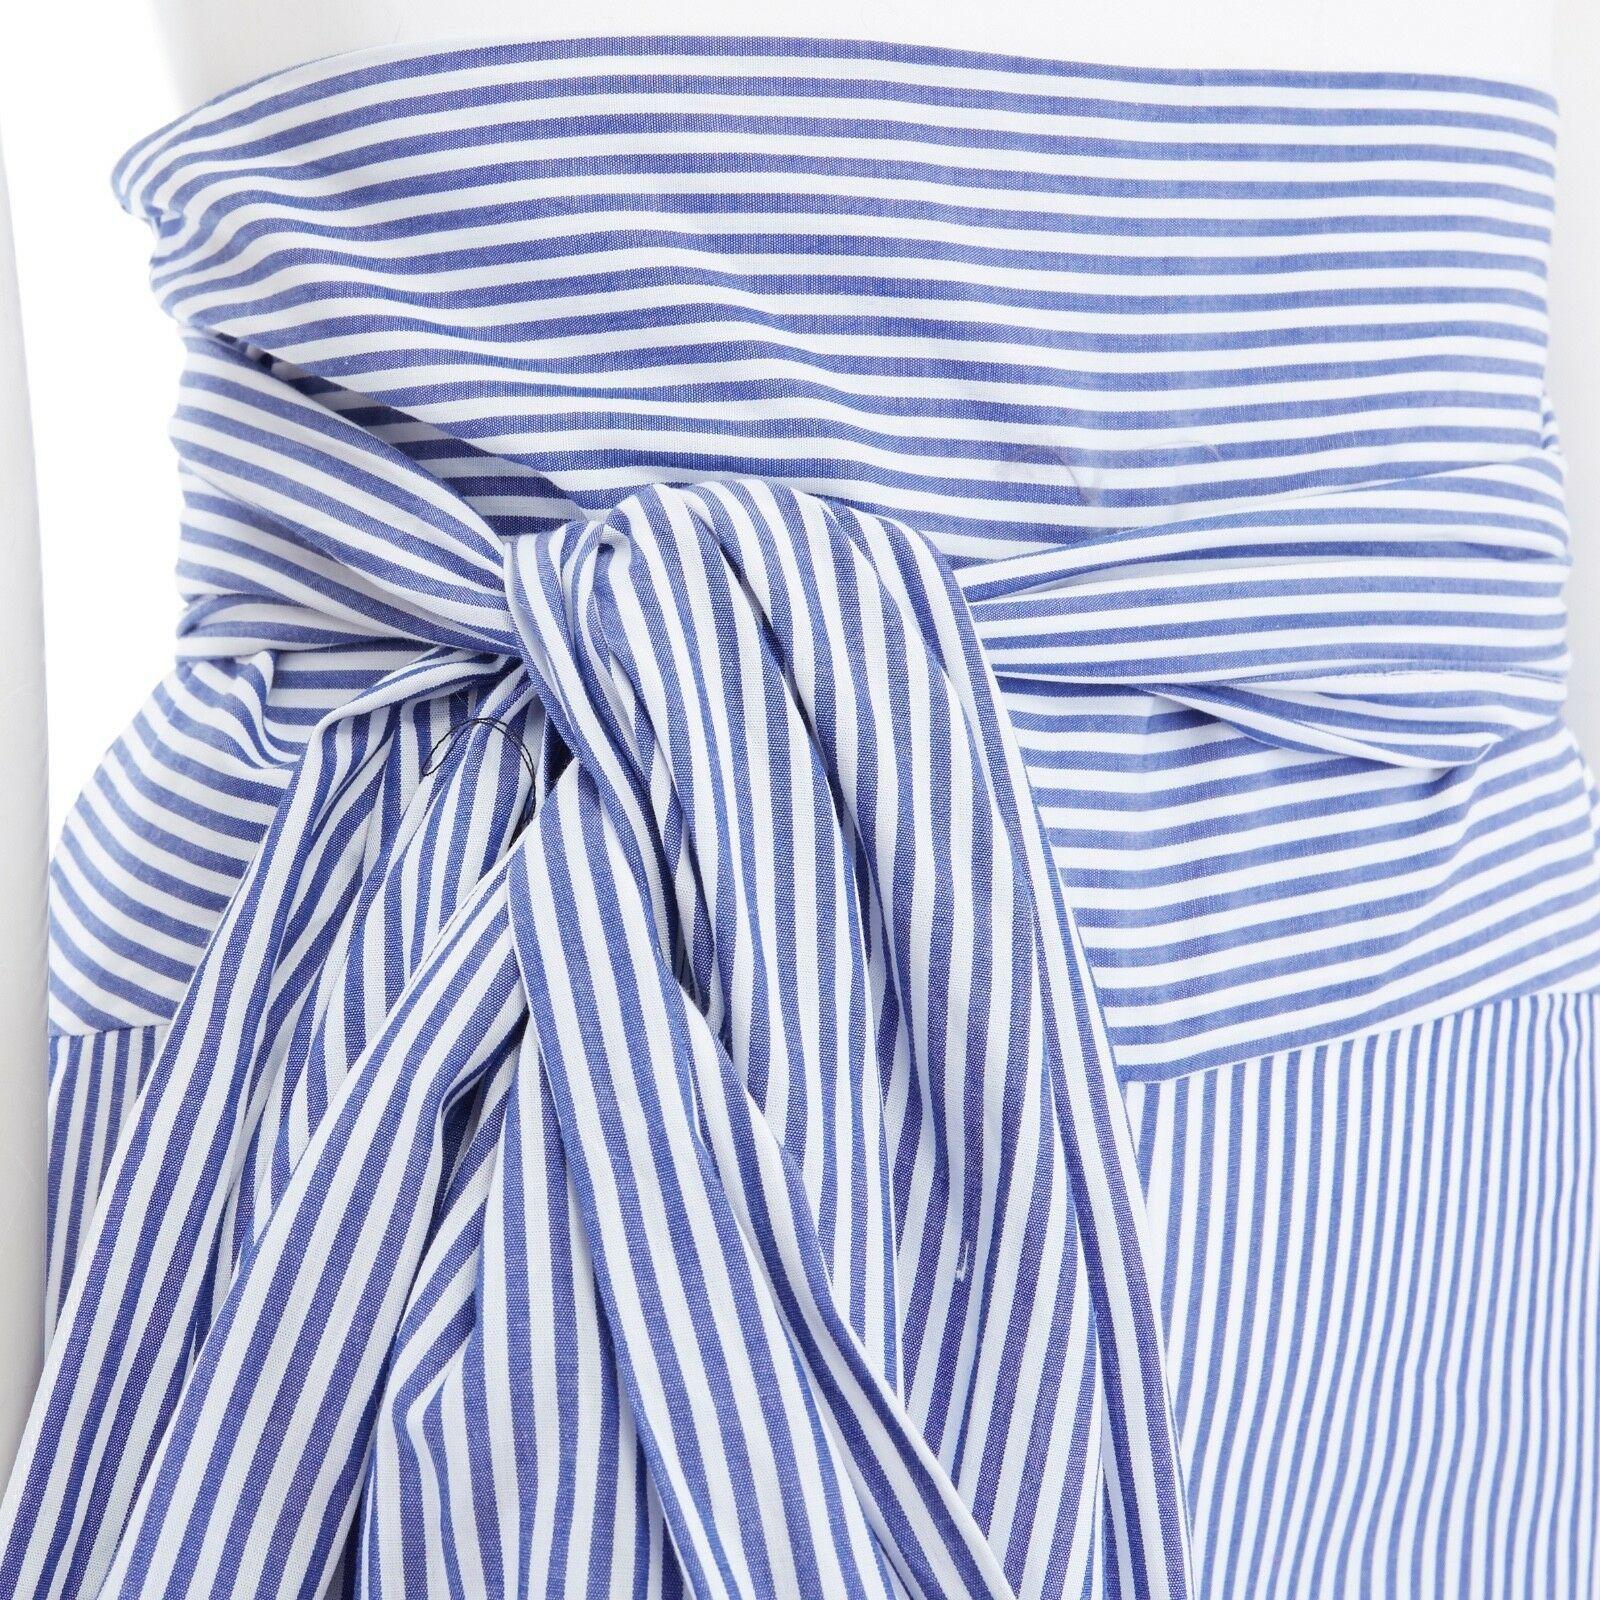 new ROSIE ASSOULIN AW16 blue white pinstripe cotton highwaist sash wide pant US6 3